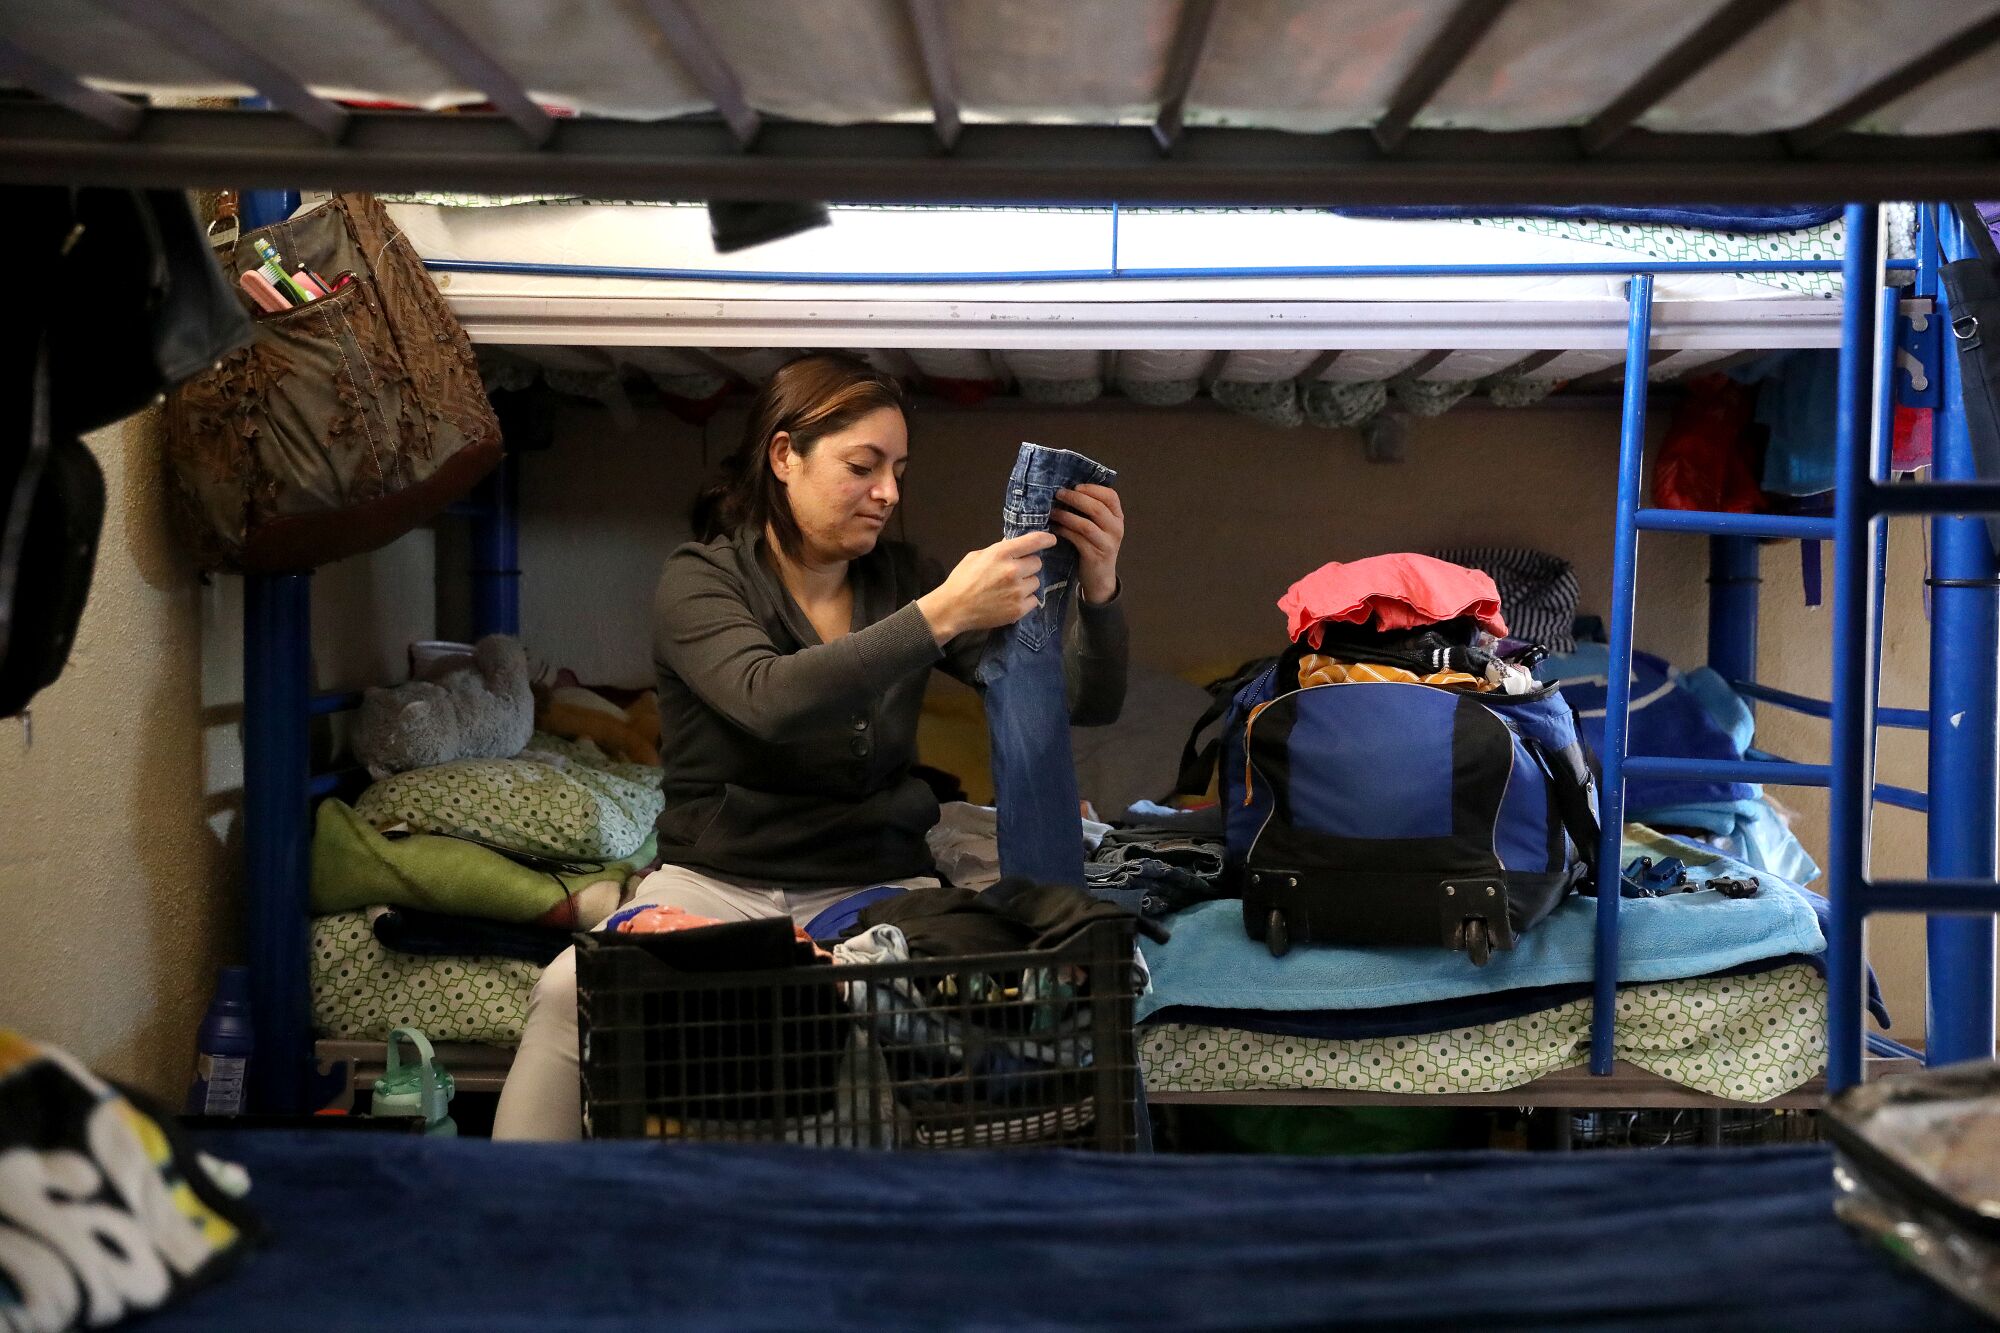 Sara Baca Mendoza awaits asylum at a shelter in Mexicali, Mexico.